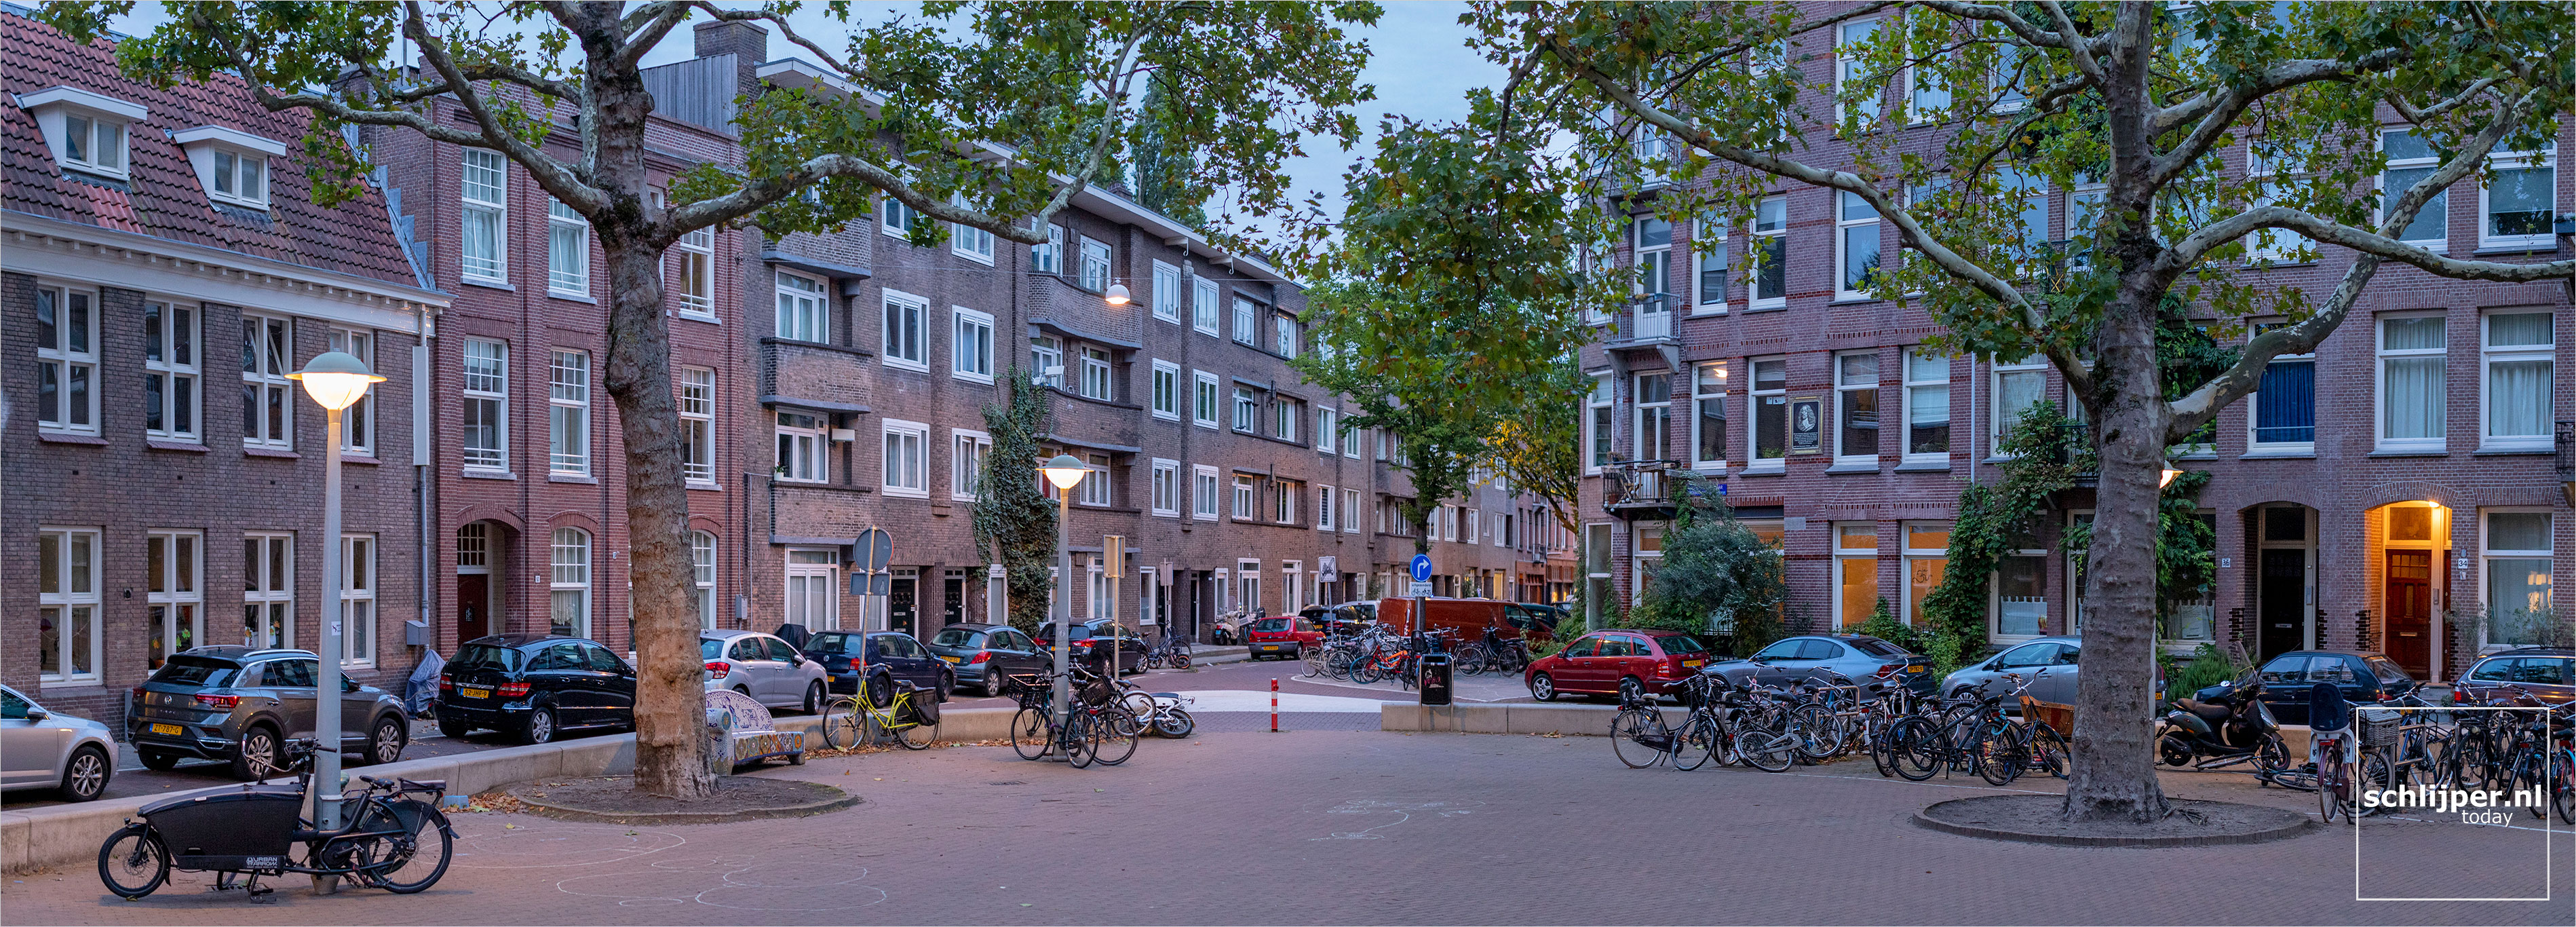 The Netherlands, Amsterdam, 1 oktober 2021